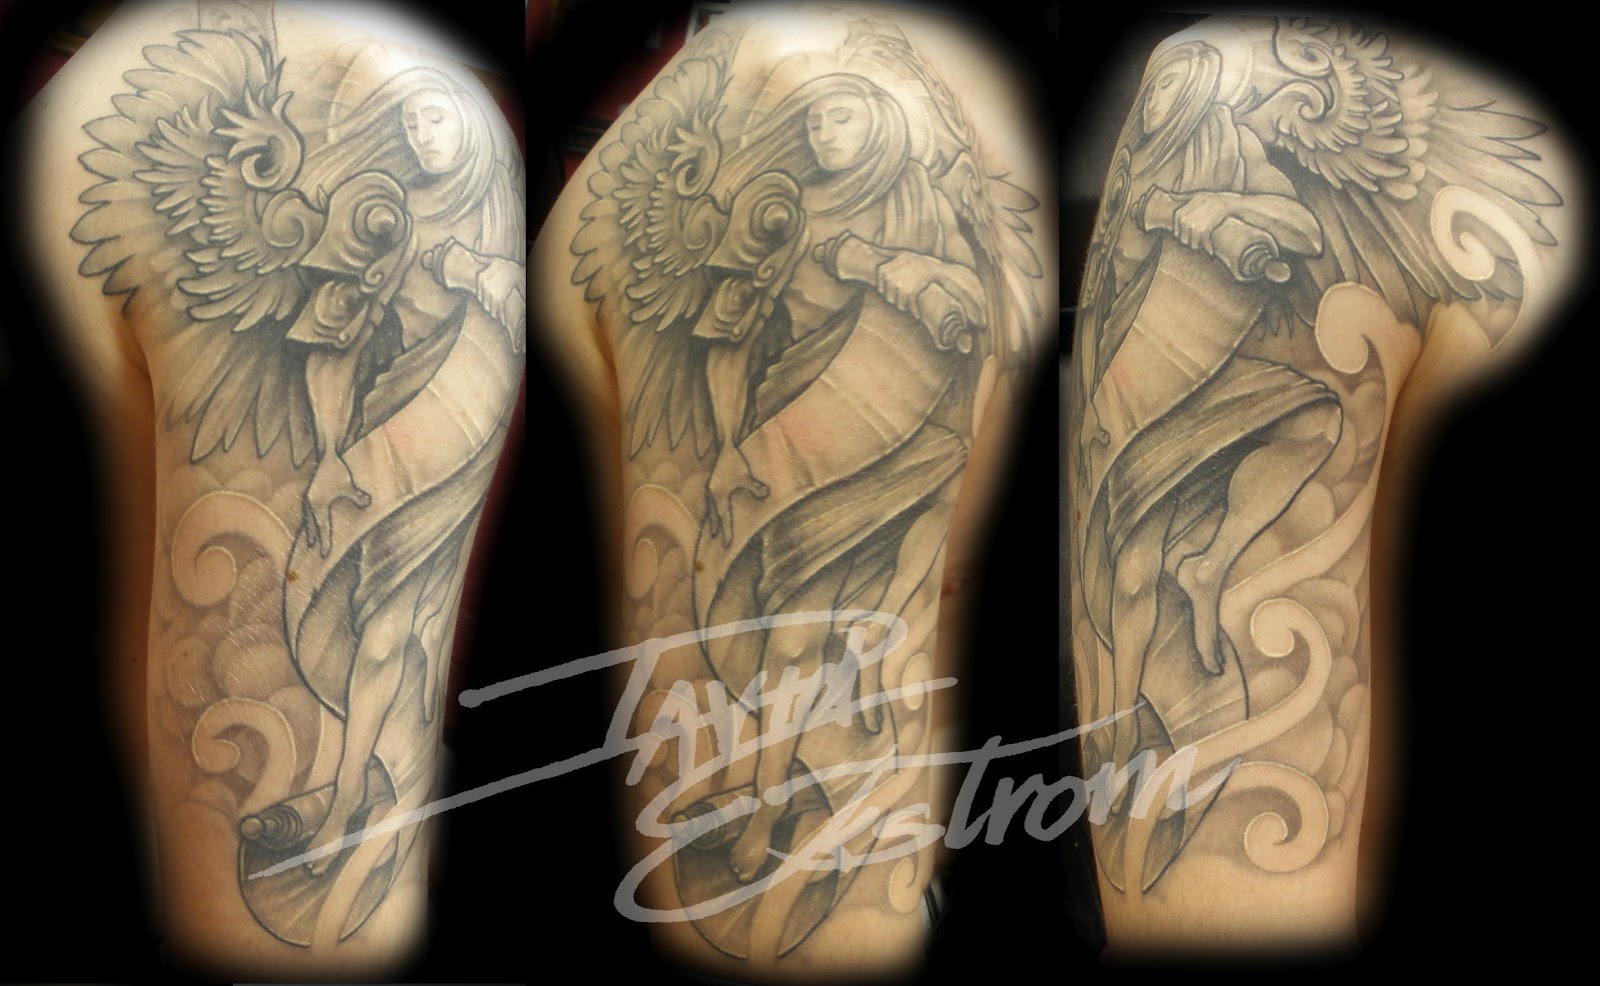 Tattoos & Art by: DAVID EKSTROM